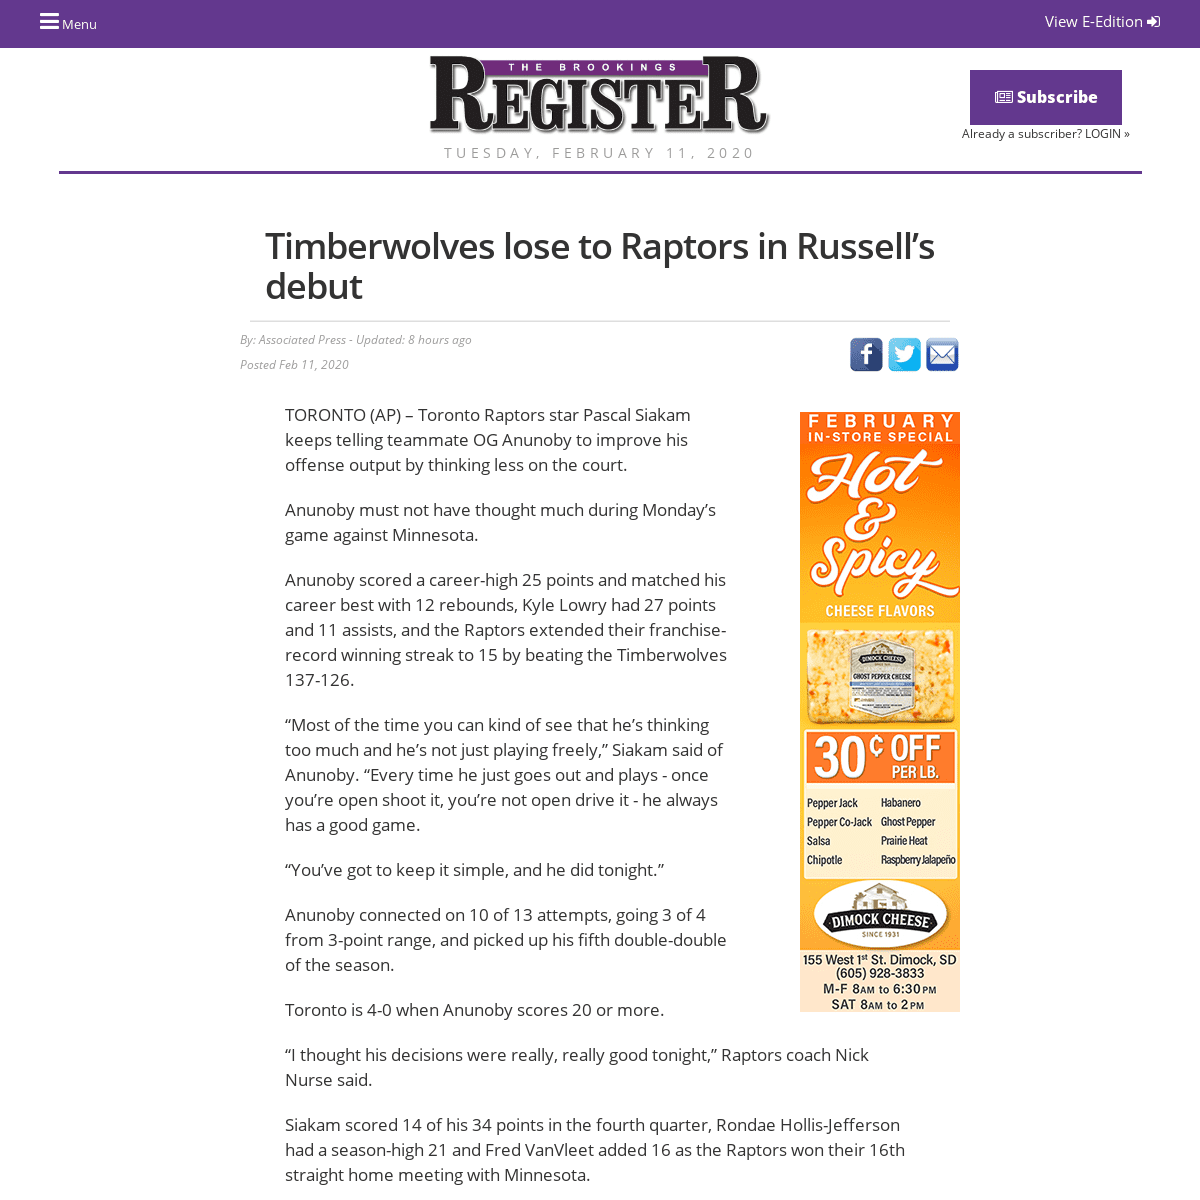 A complete backup of brookingsregister.com/article/timberwolves-lose-to-raptors-in-russells-debut